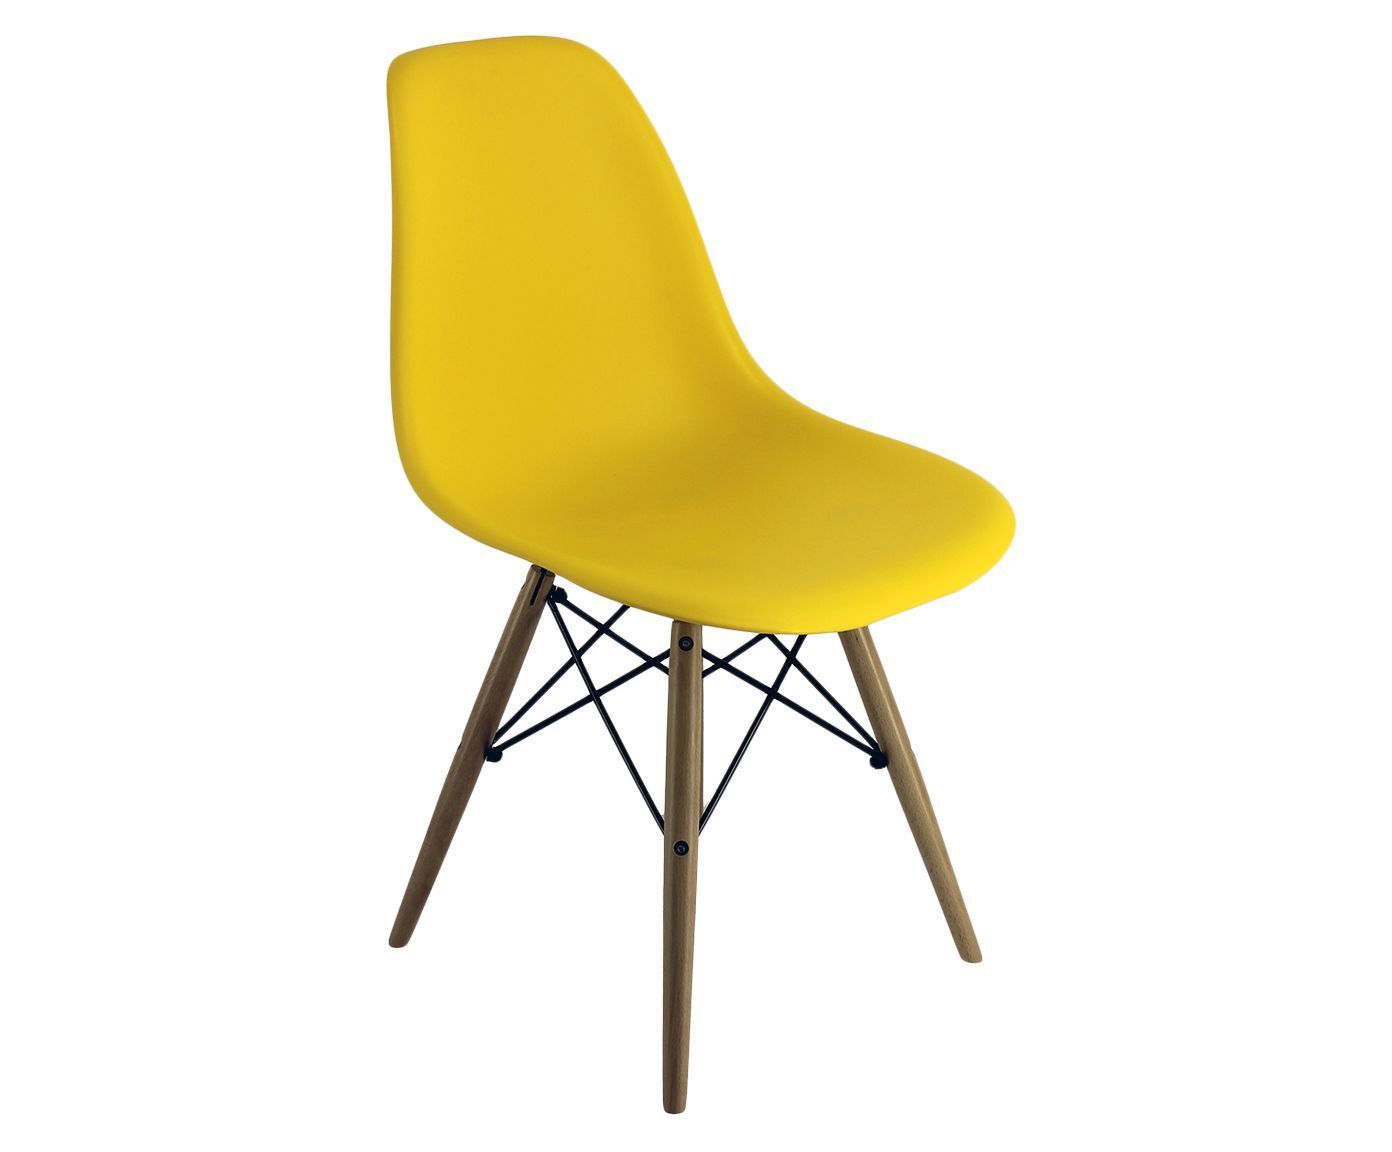 Cadeira paris wood - soleil | Westwing.com.br